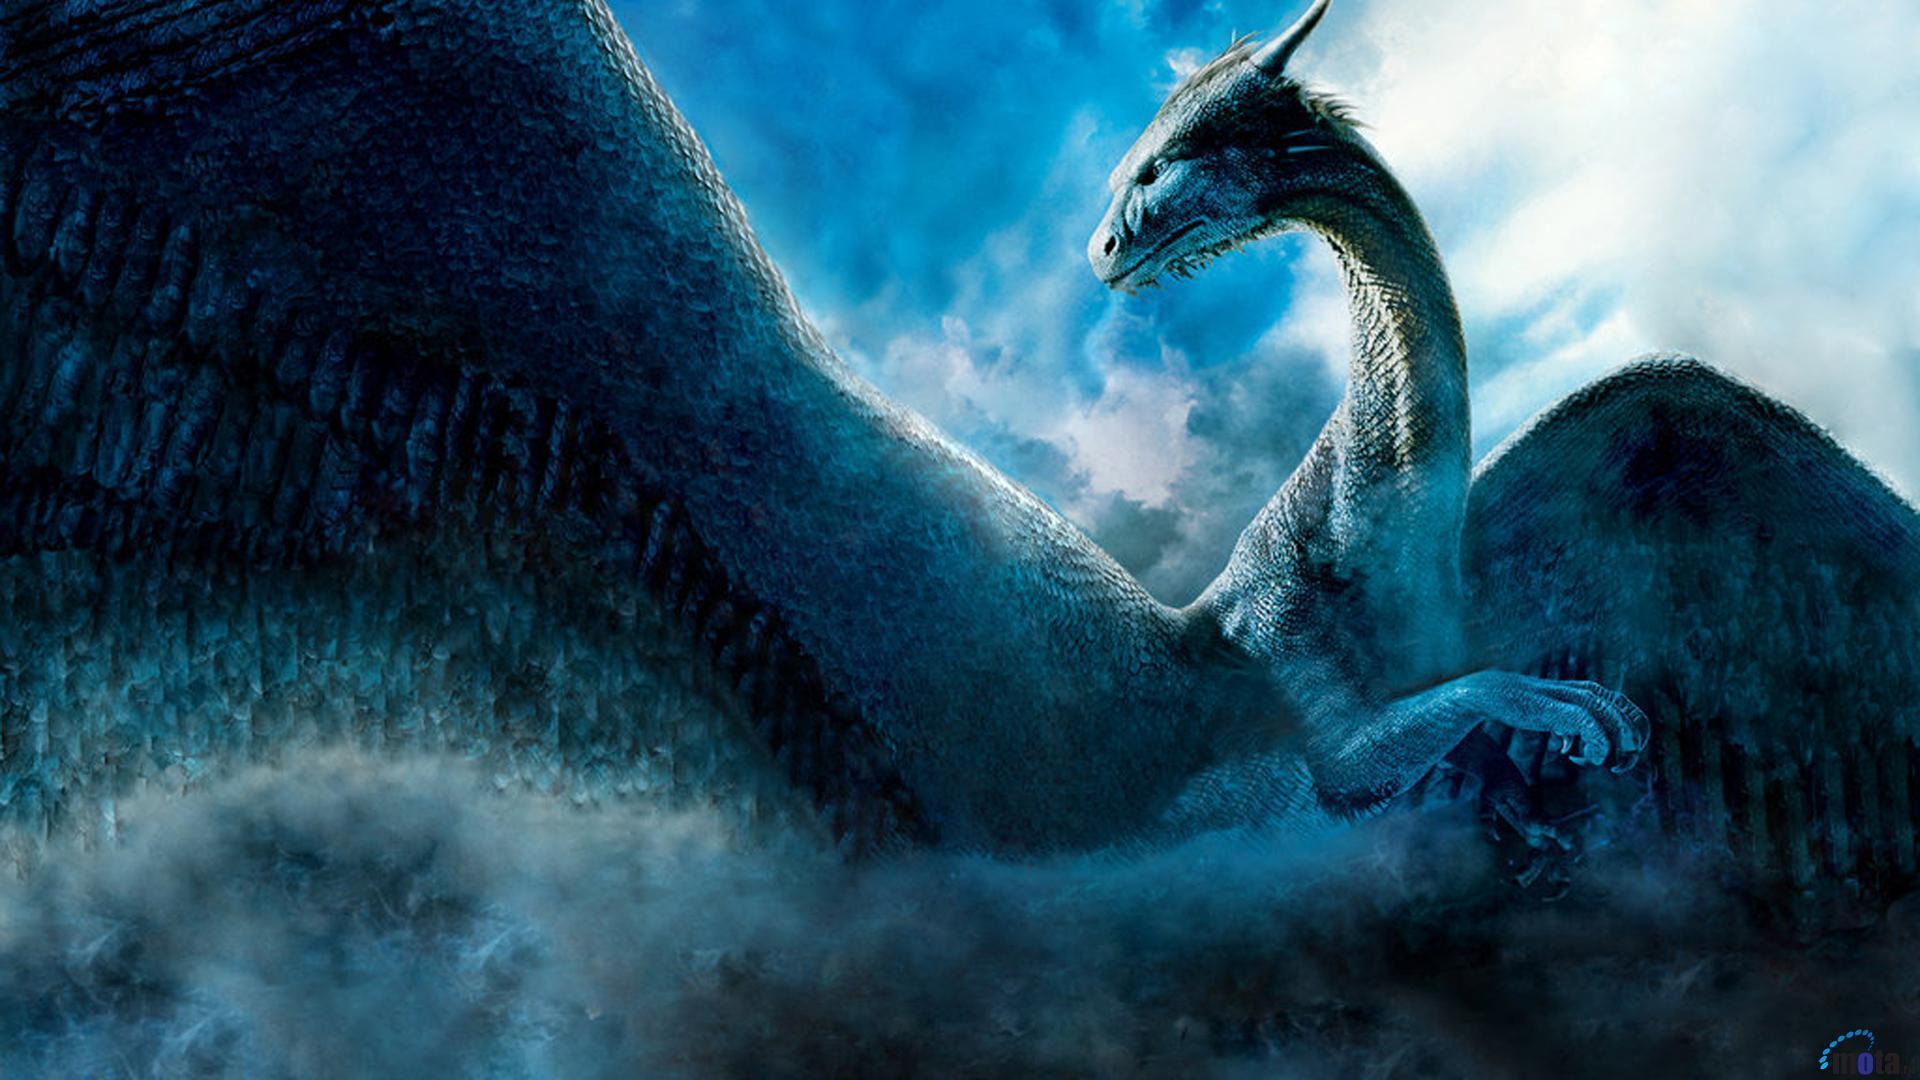 Saphira The Dragon From Eragon